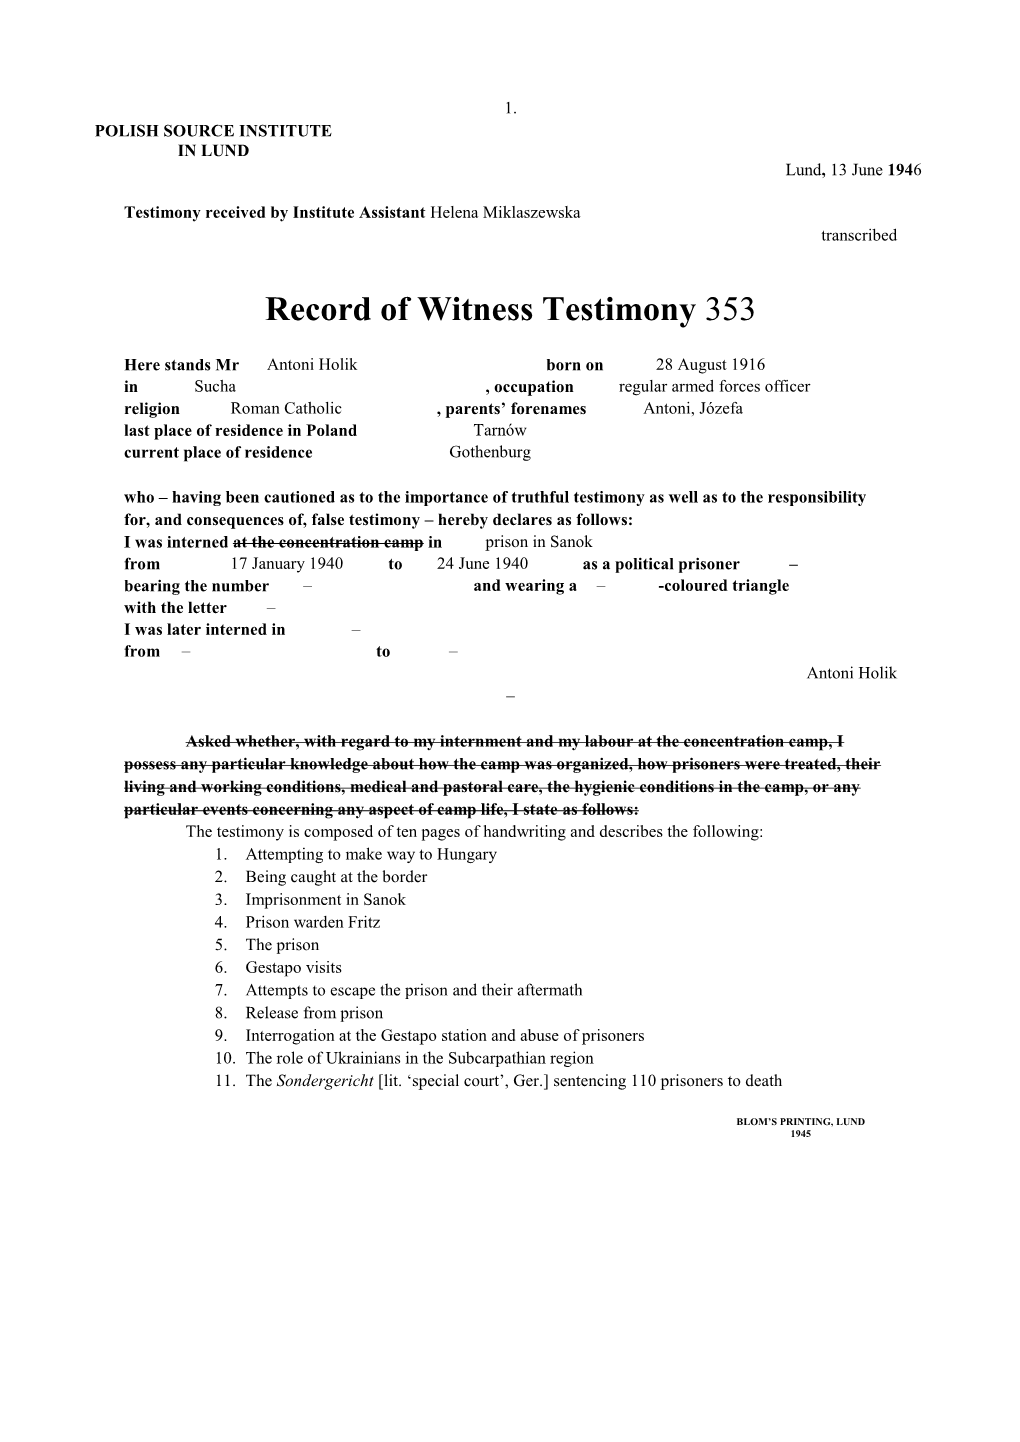 Record of Witness Testimony 353